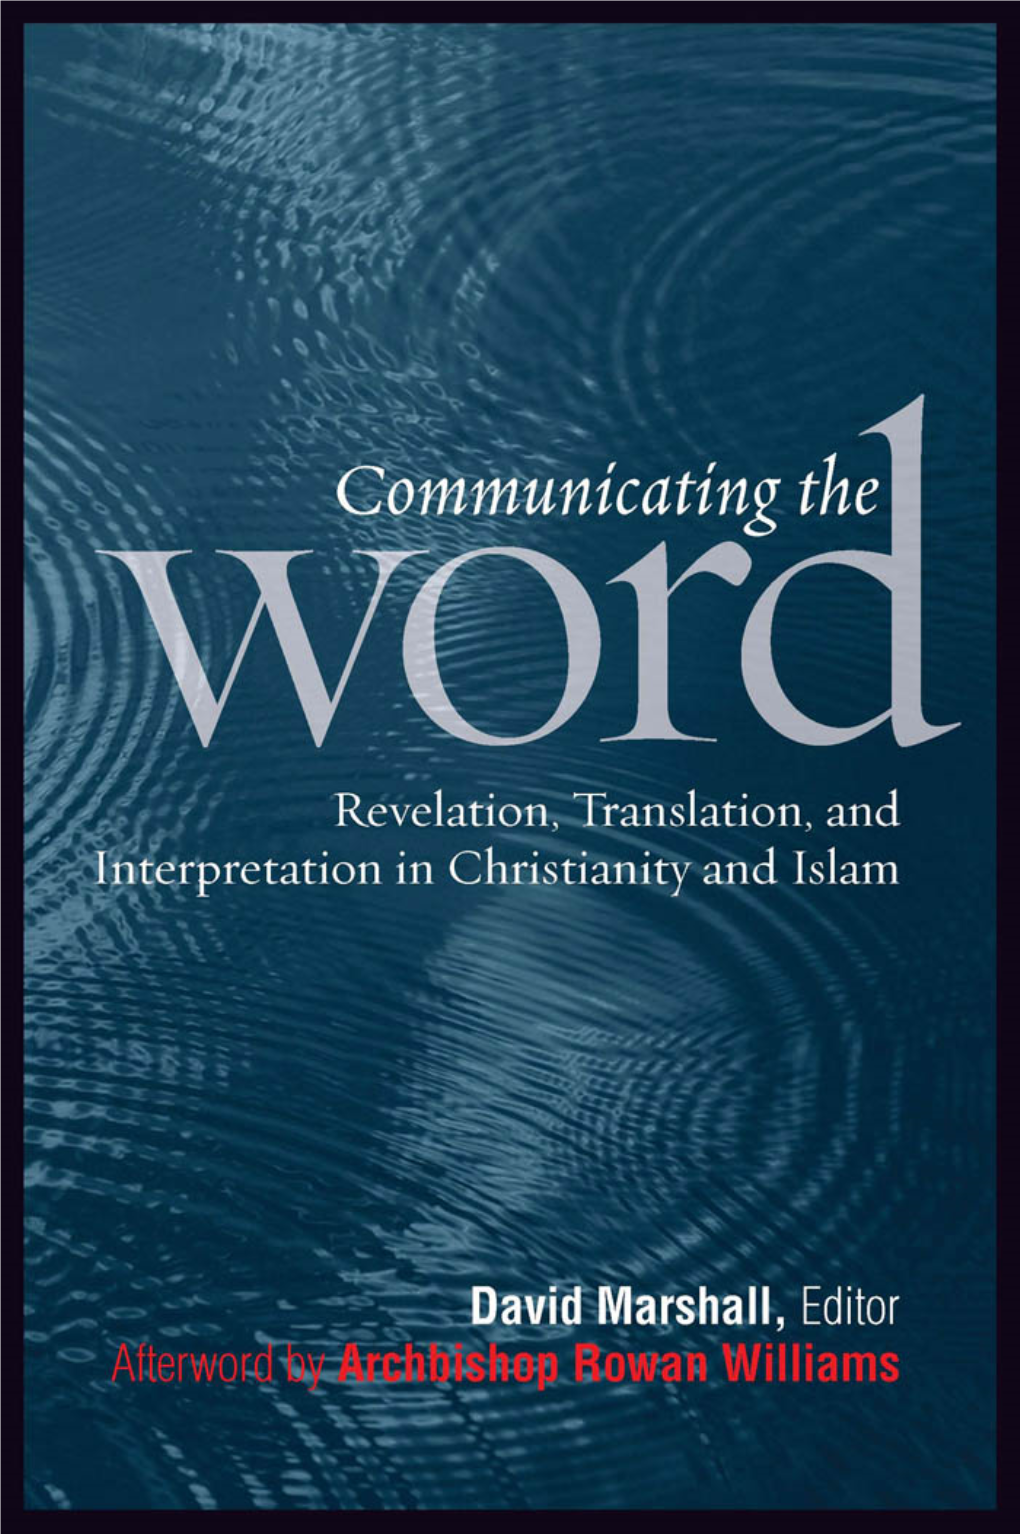 Revelation, Translation, and Interpretation in Christianity and Islam